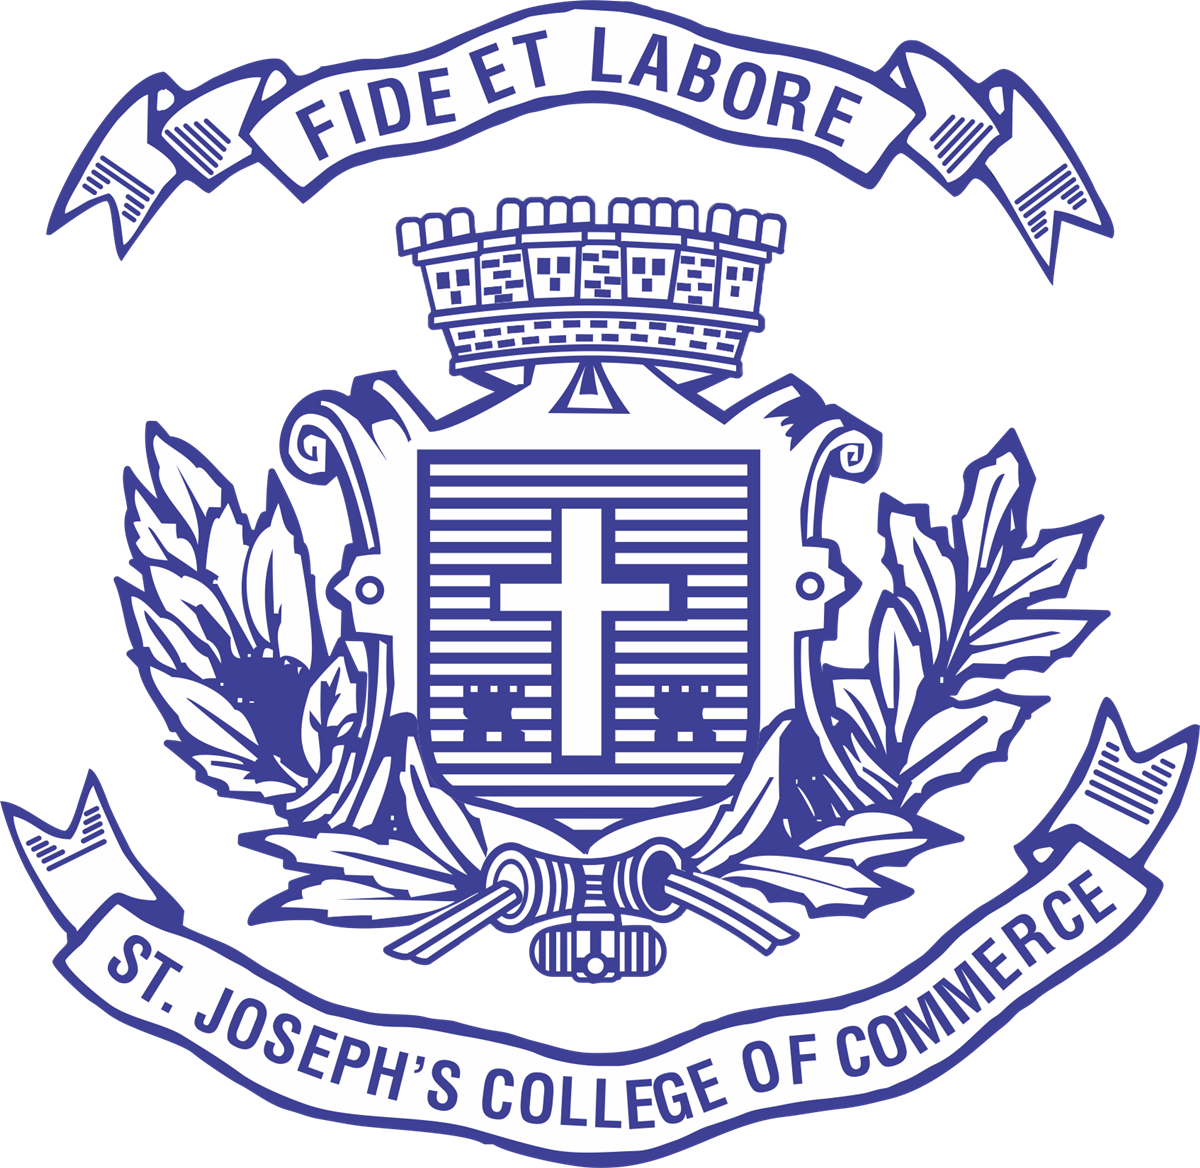 St. Joseph's College of Commerce Logo